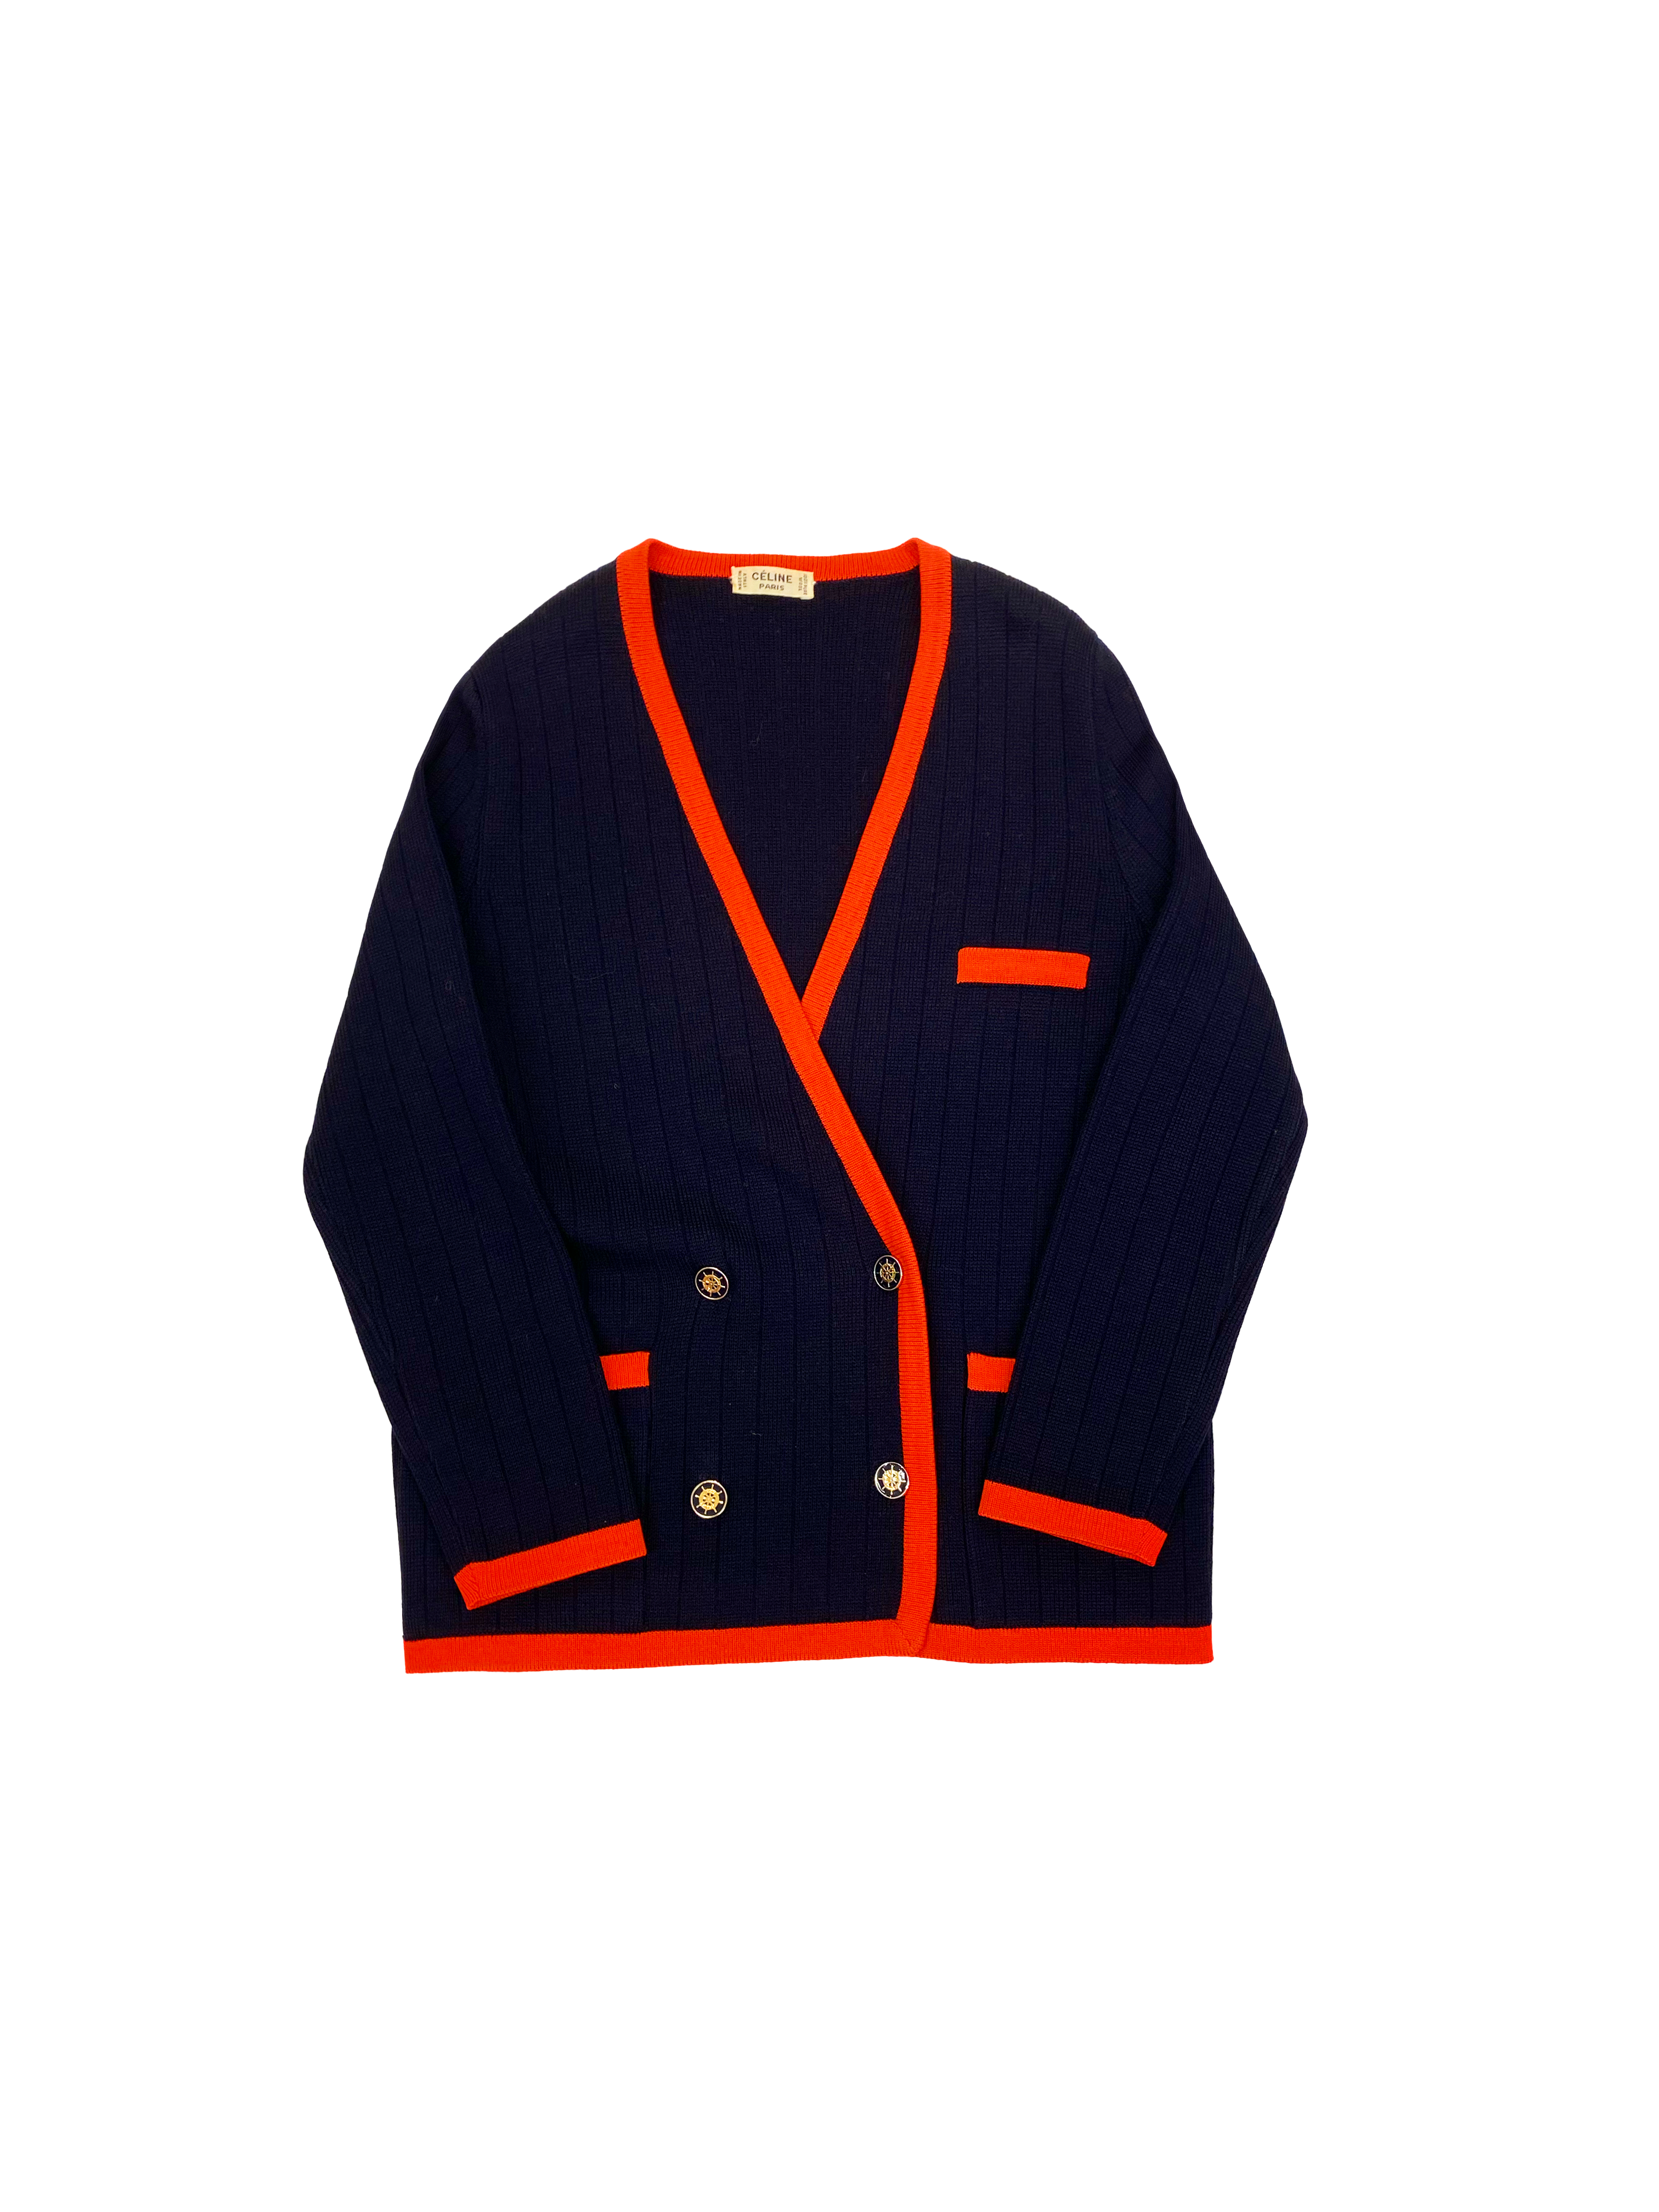 Louis Vuitton Graphic Nautical Knit Cardigan Blue. Size S0